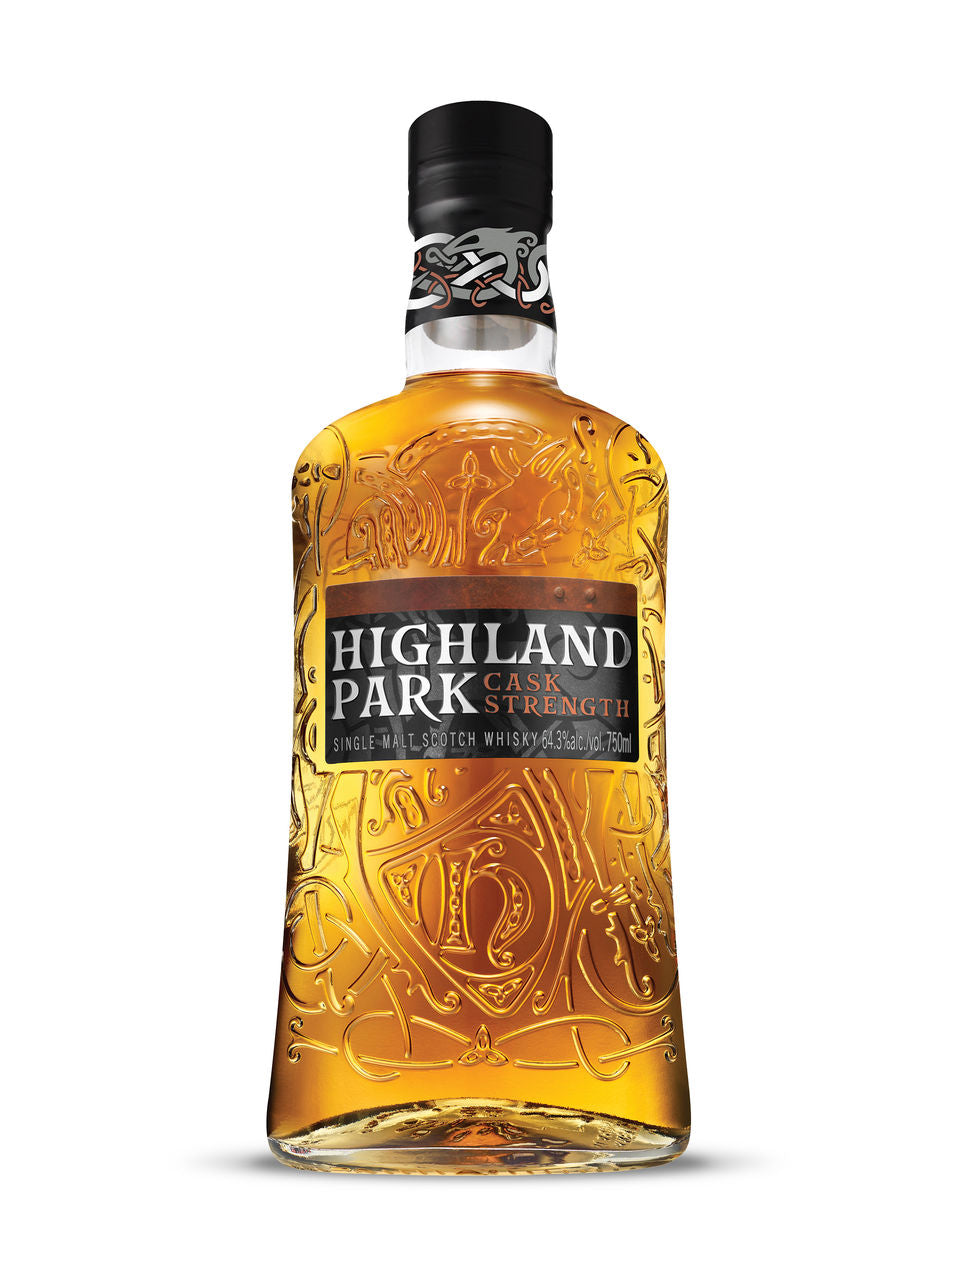 Highland Park Cask Strength 4th Release (2 Bottle Limit) 750 ml bottle